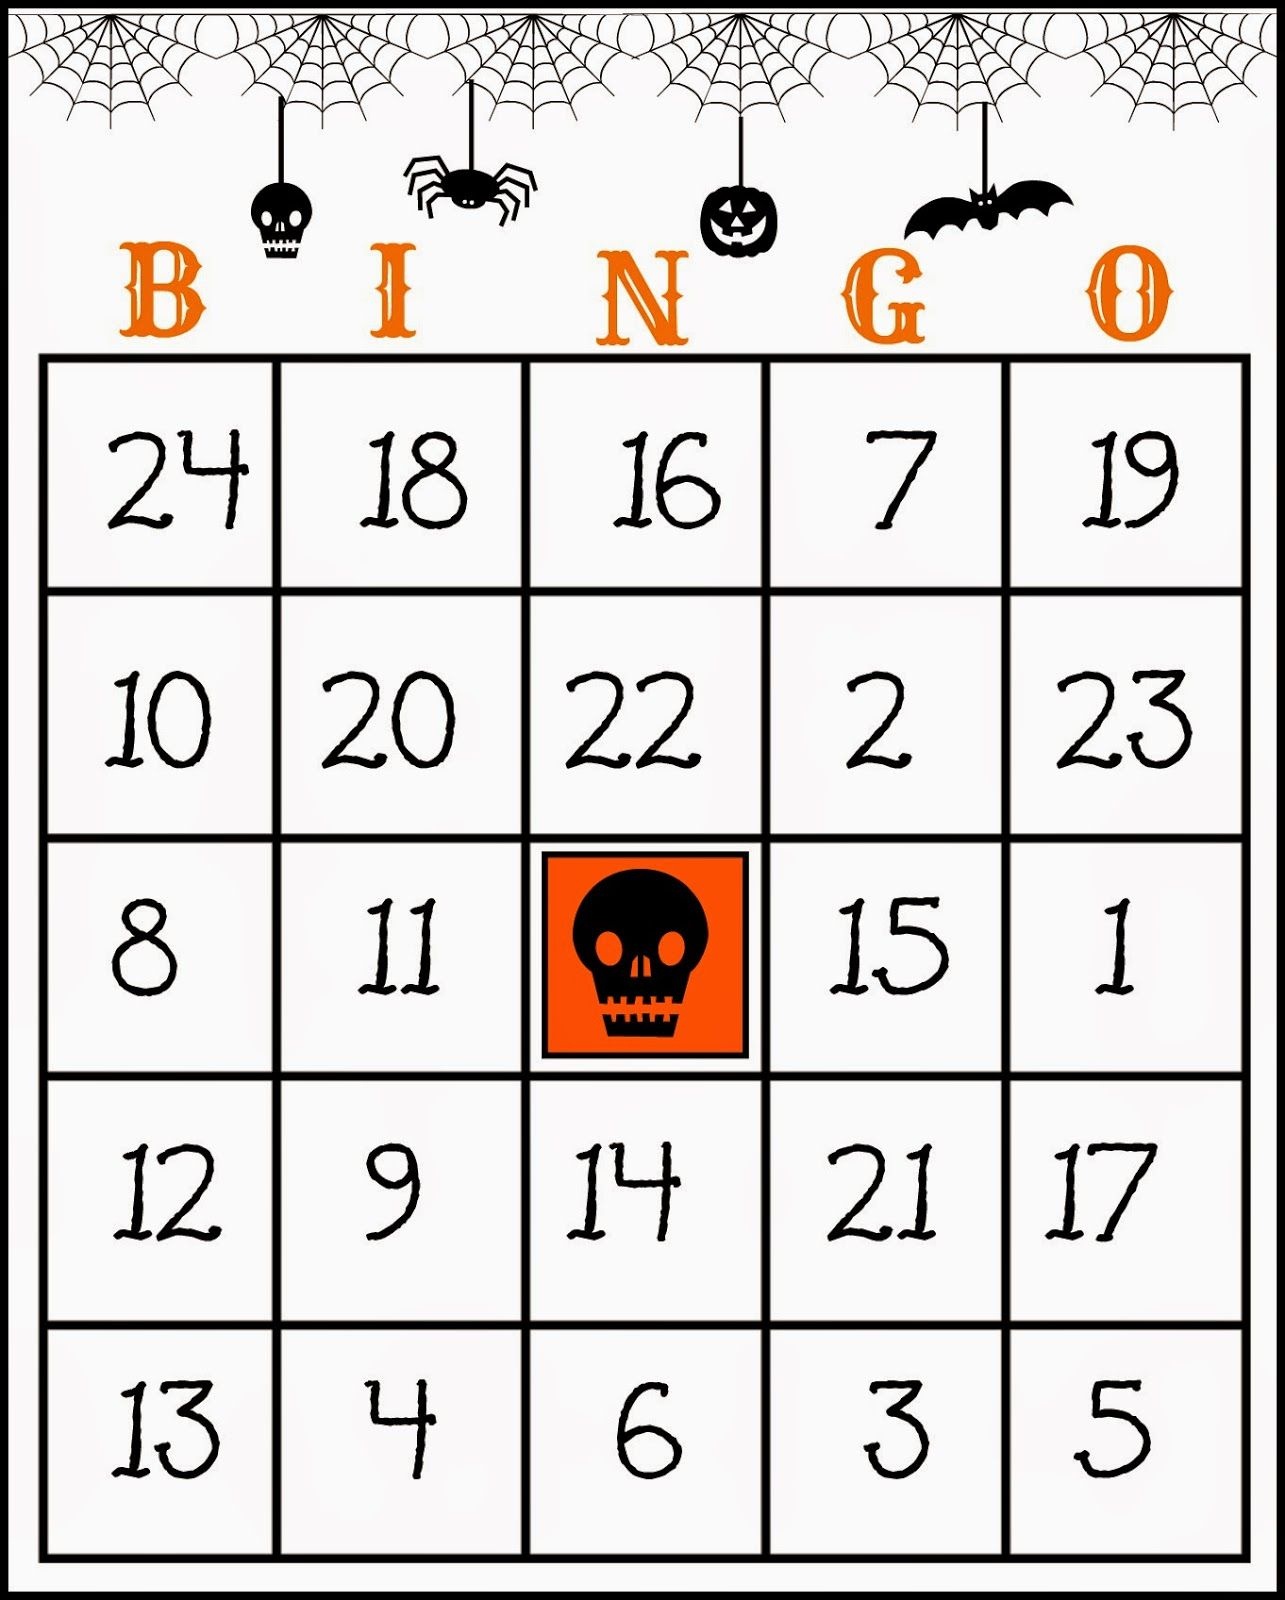 Crafty In Crosby: Free Printable Halloween Bingo Game | Halloween - Free Printable Halloween Bingo Cards